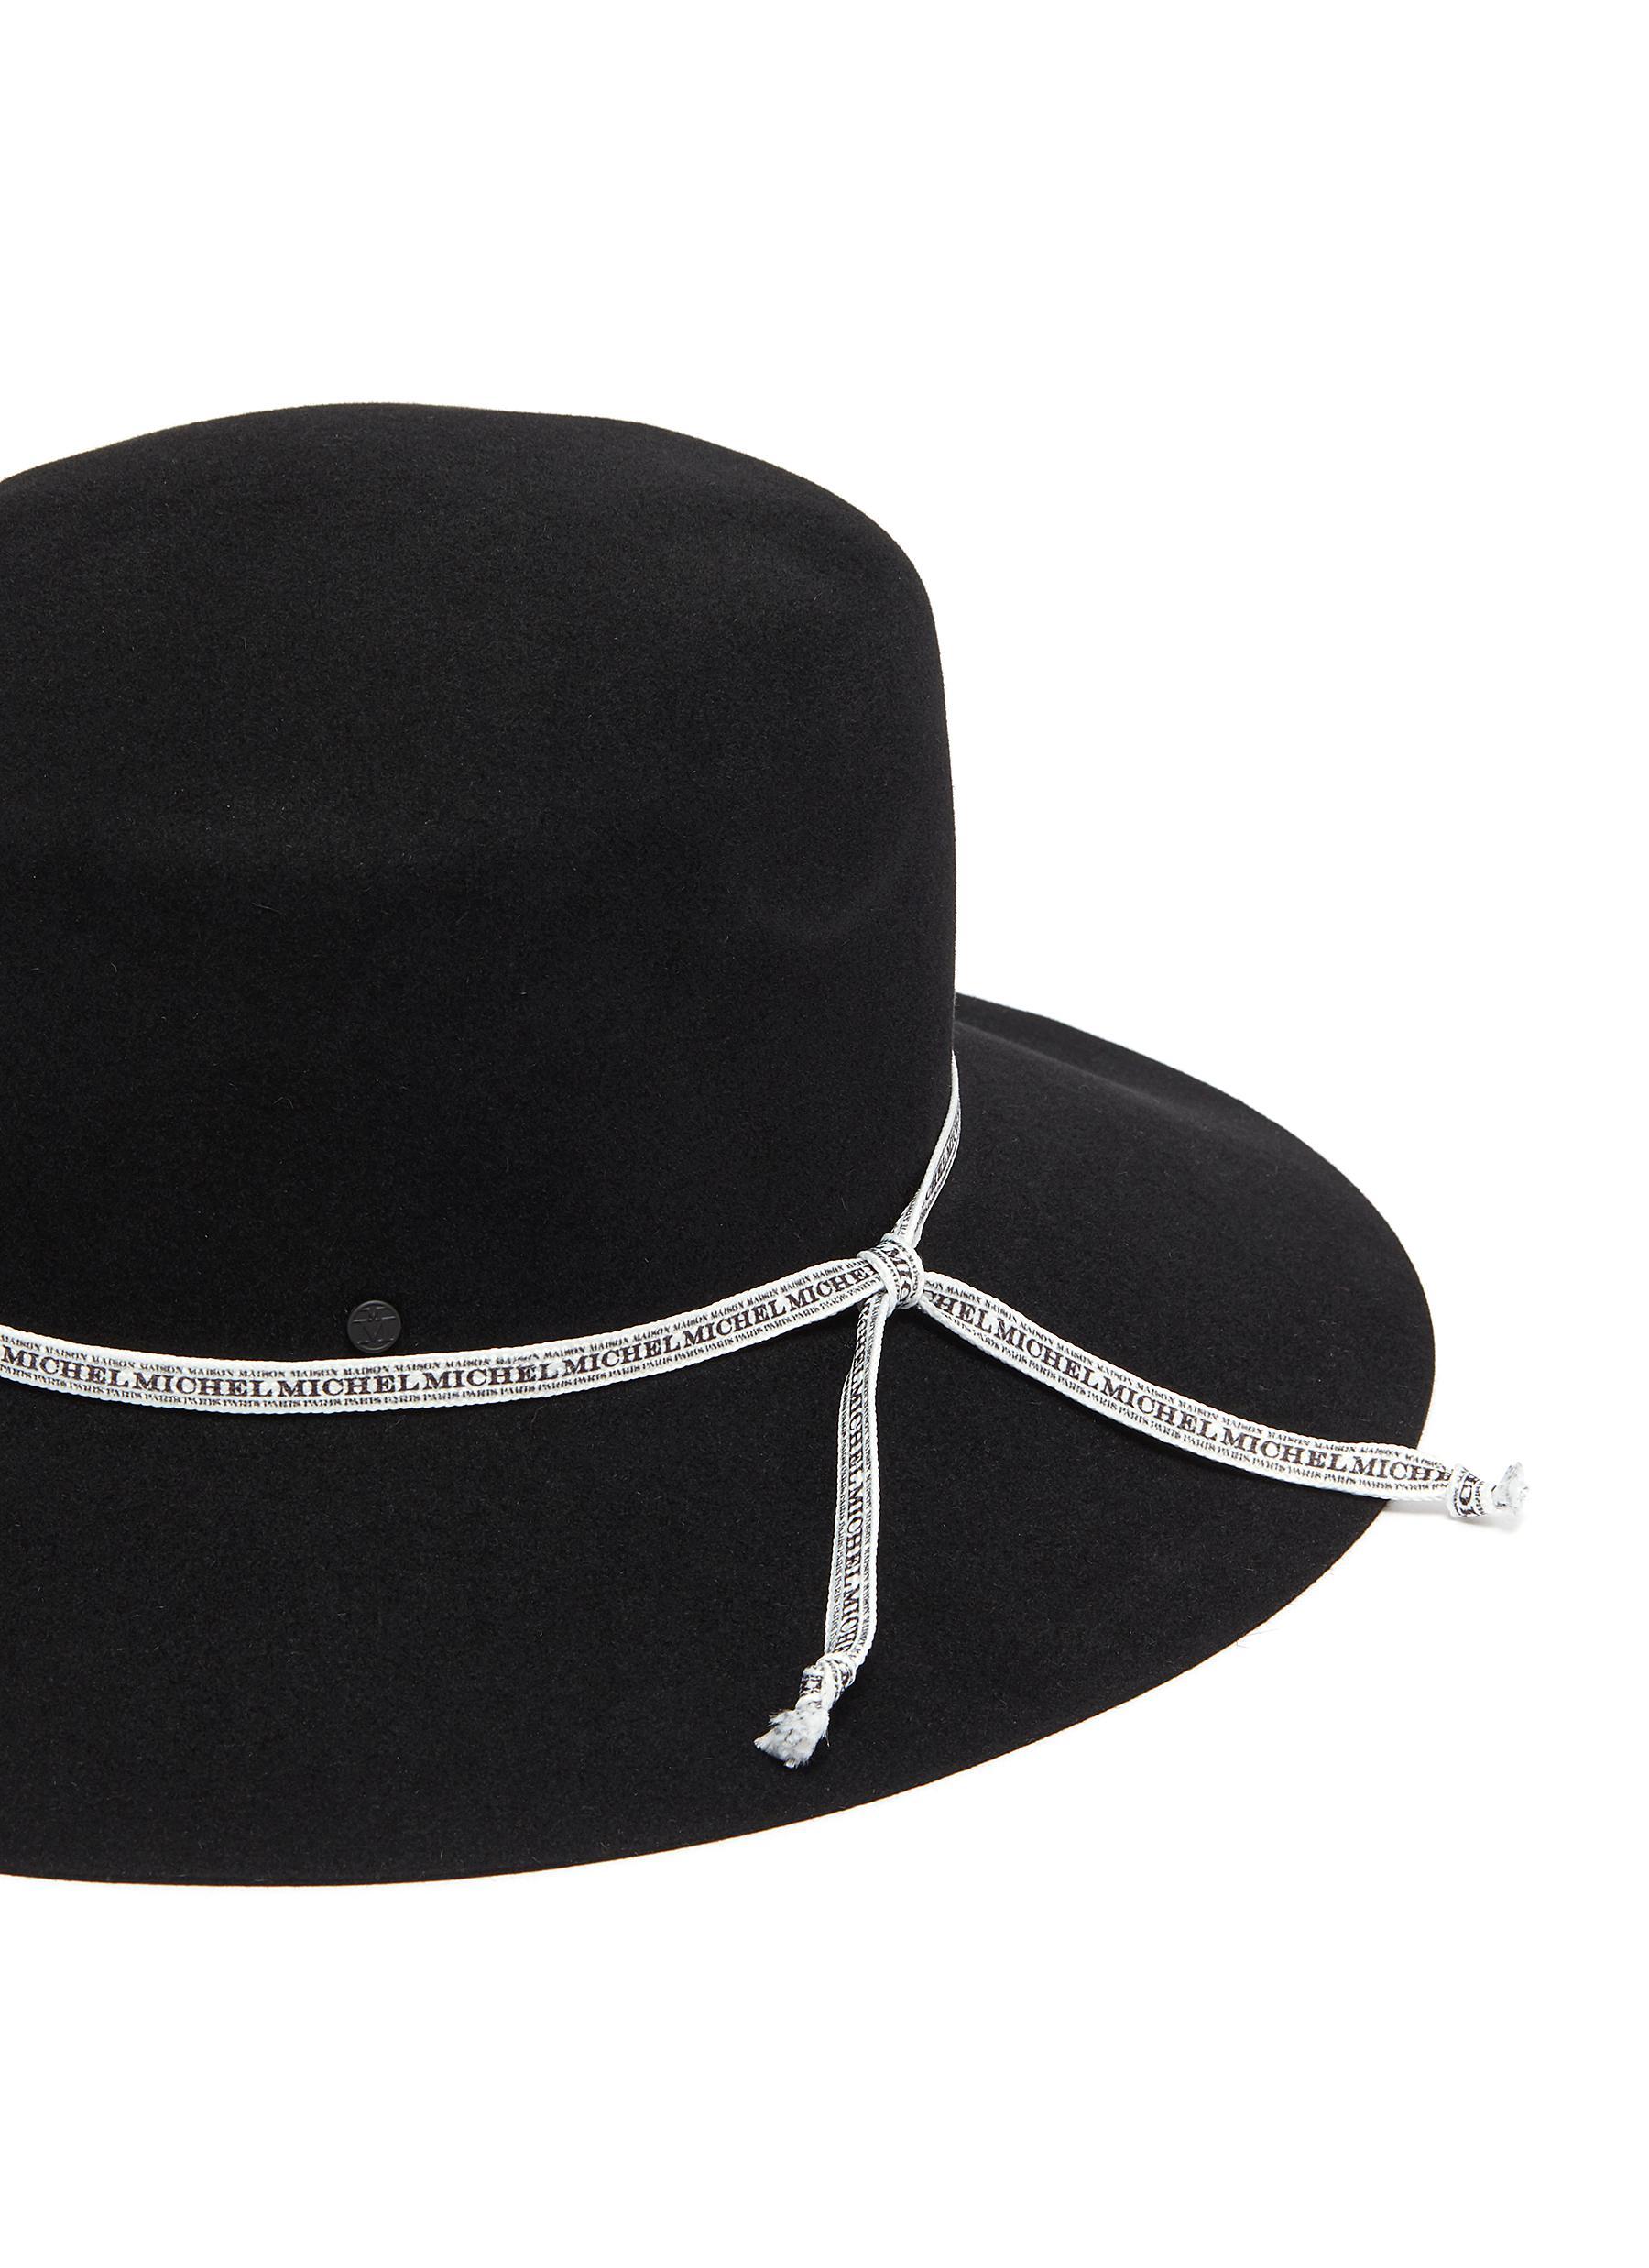 Maison Michel New Kendall Logo Ribbon Rabbit Felt Hat in Black - Lyst